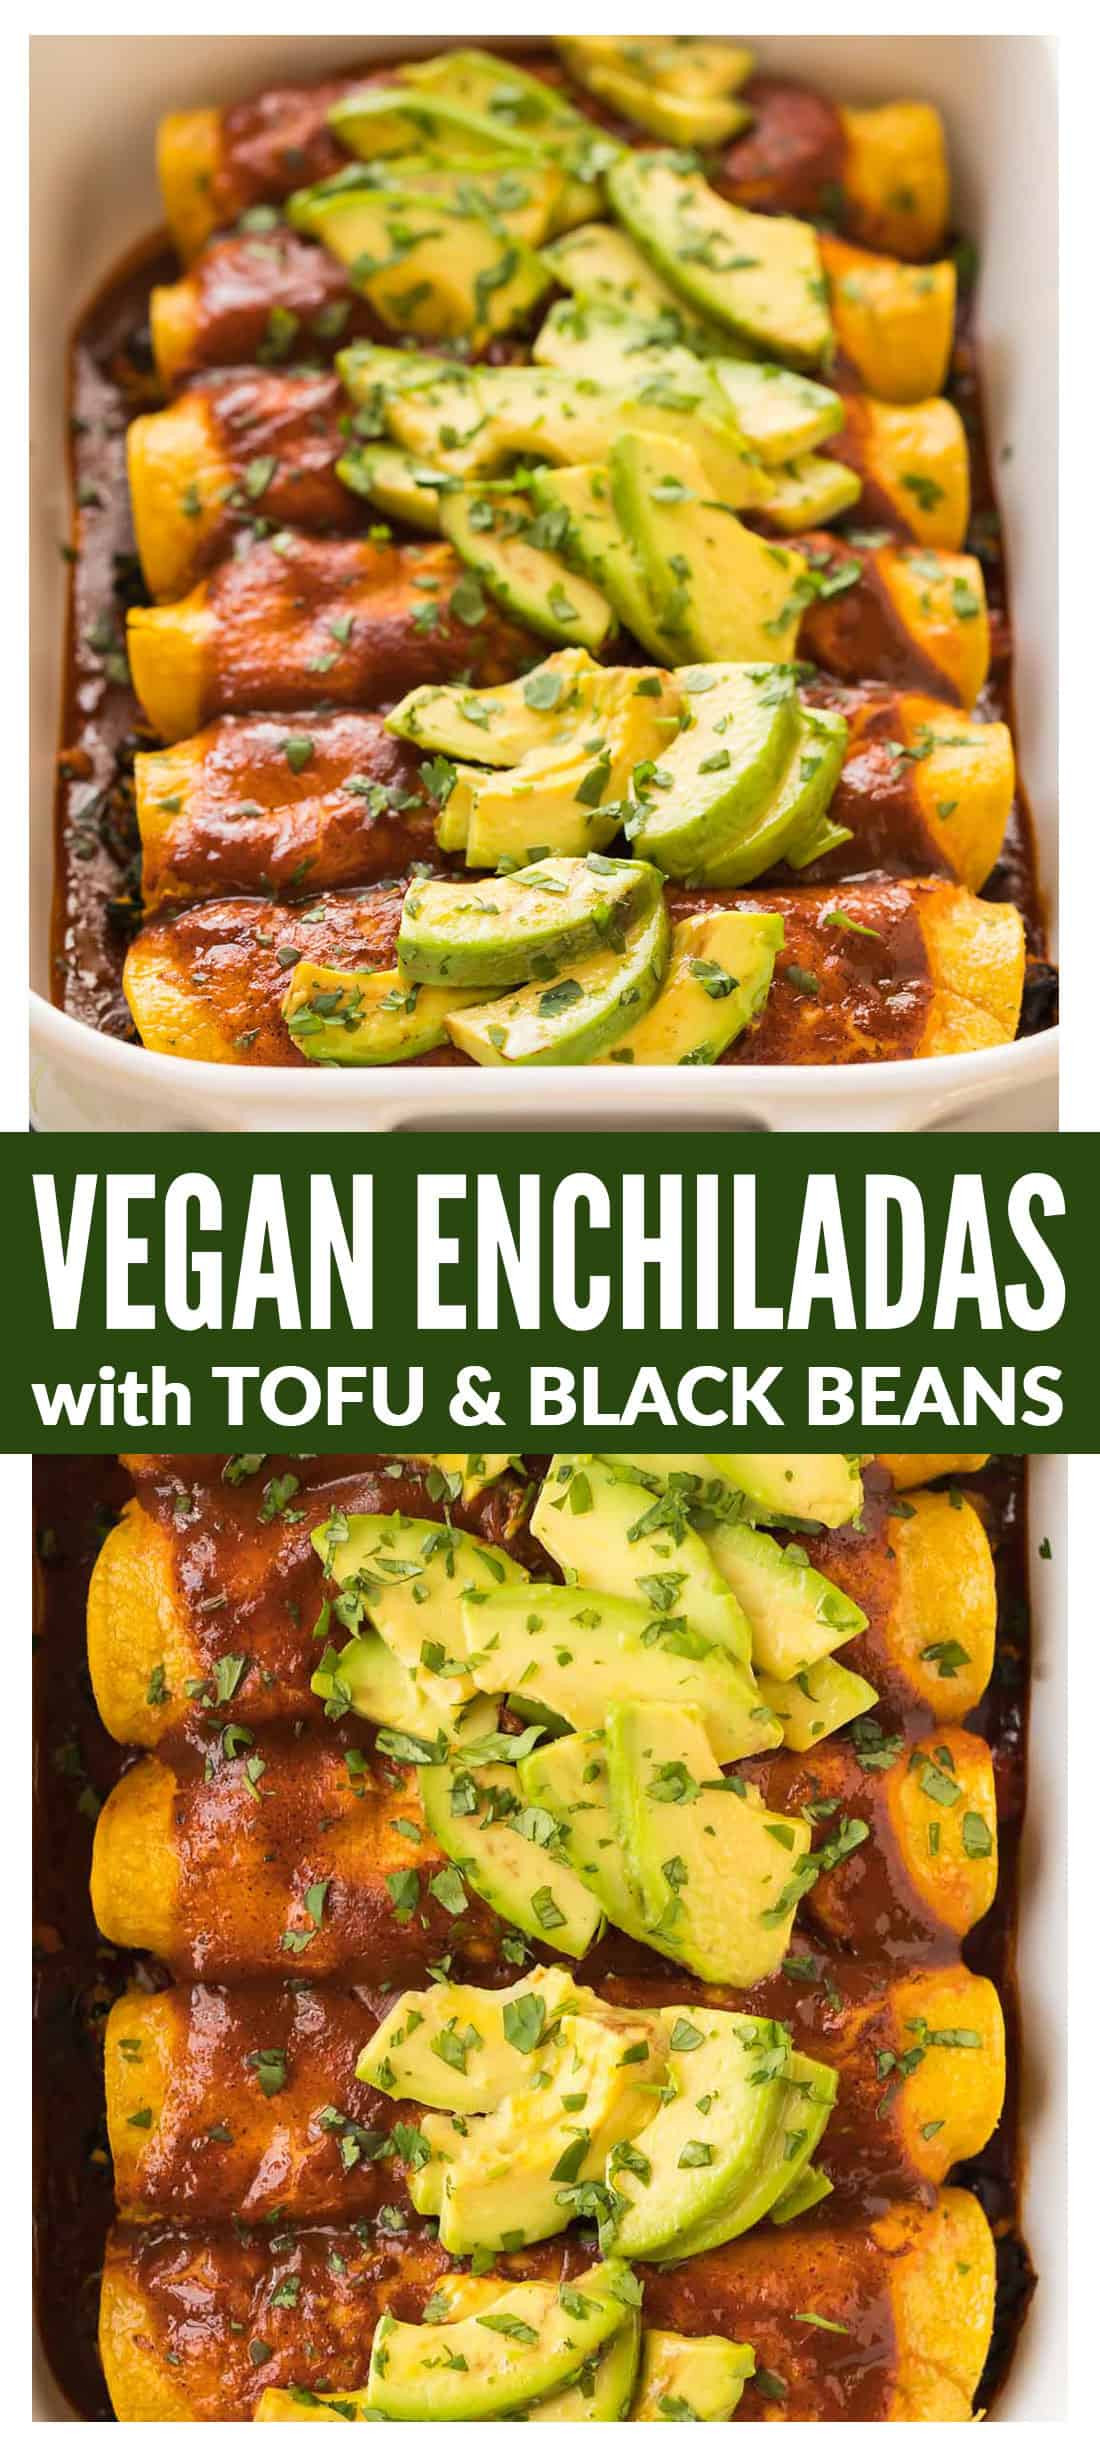 Enchiladas Recipes Vegetarian
 Vegan Enchiladas with Tofu and Black Beans